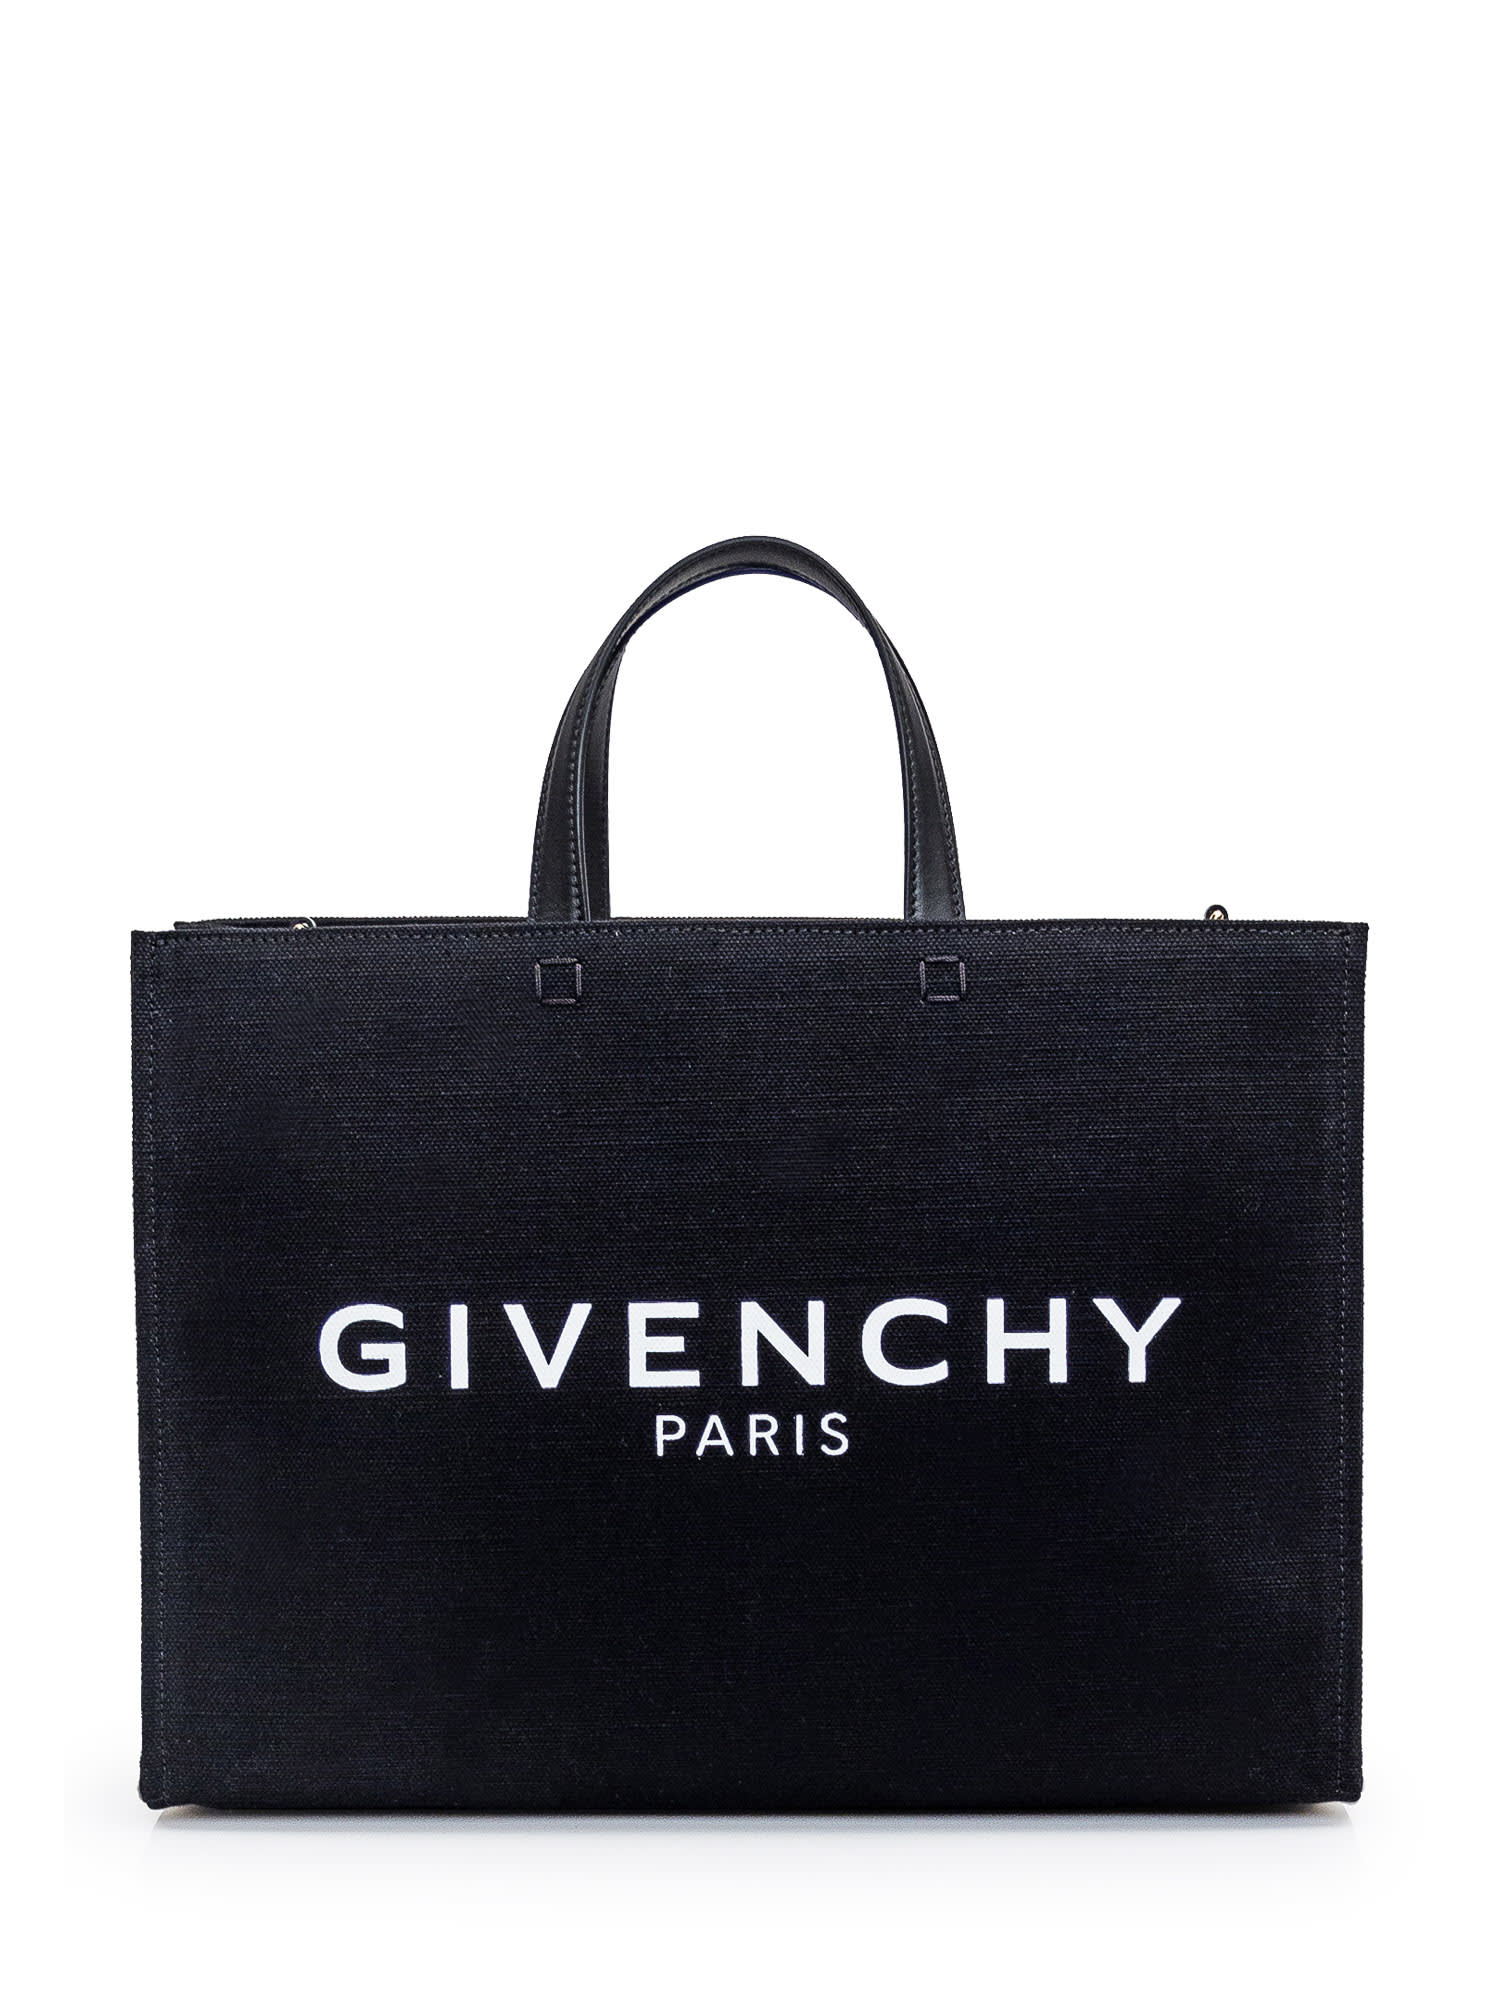 Givenchy G-tote Medium Bag In Black